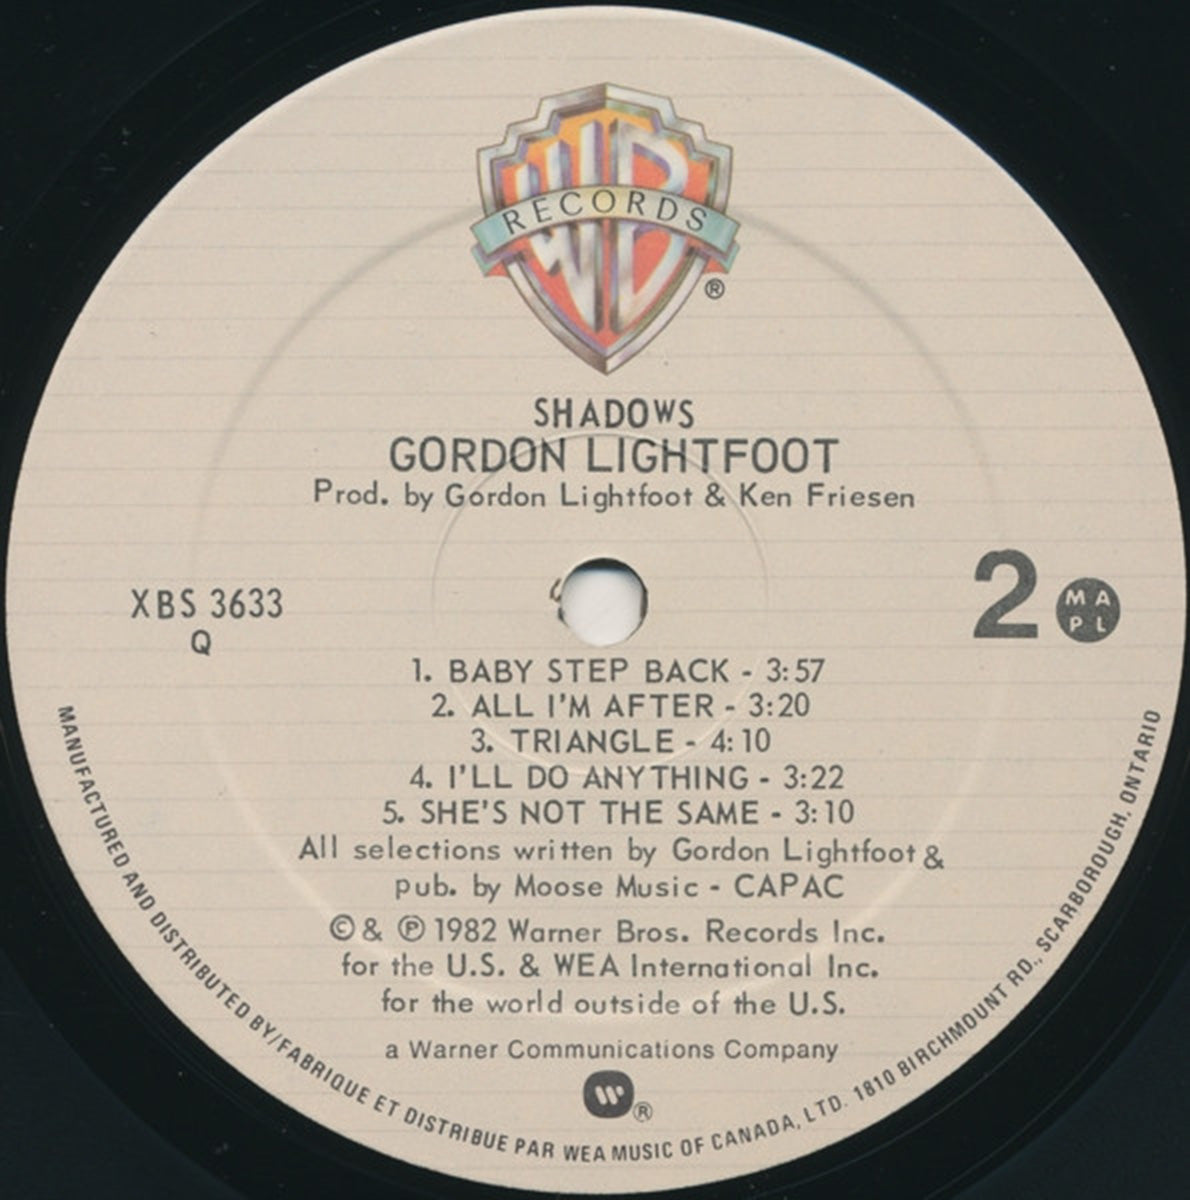 Gordon Lightfoot – Shadows - 1982